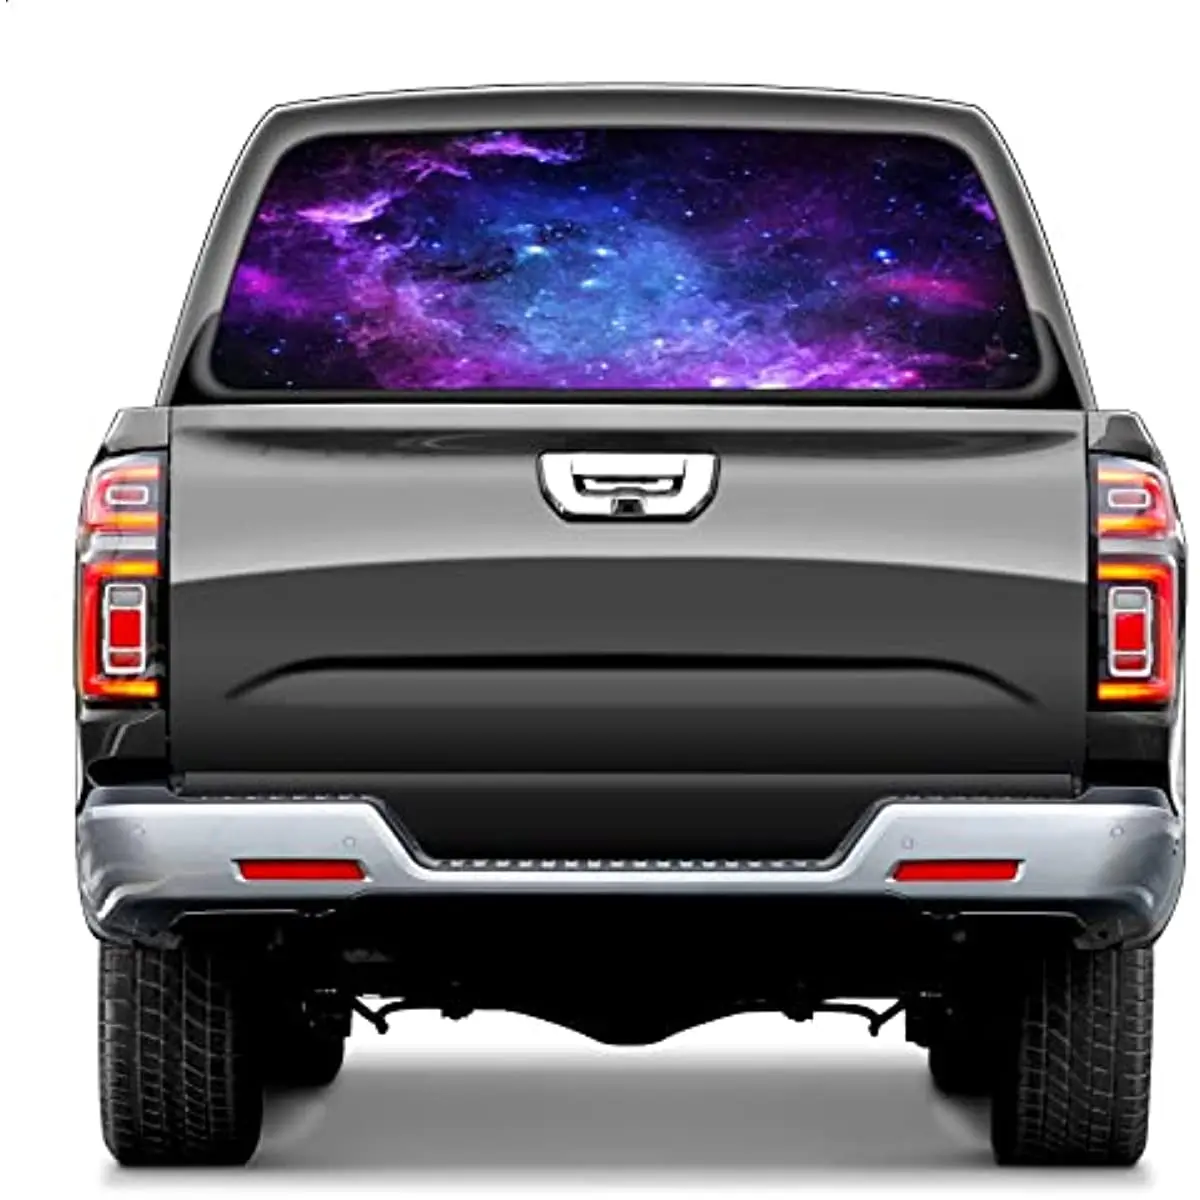 

Truck Rear Window Decal Wrap Galaxy Space Pickup Trucks Back Window Sticker Graphics Decor Vinyl Window Film Fit Most Pickup Tru